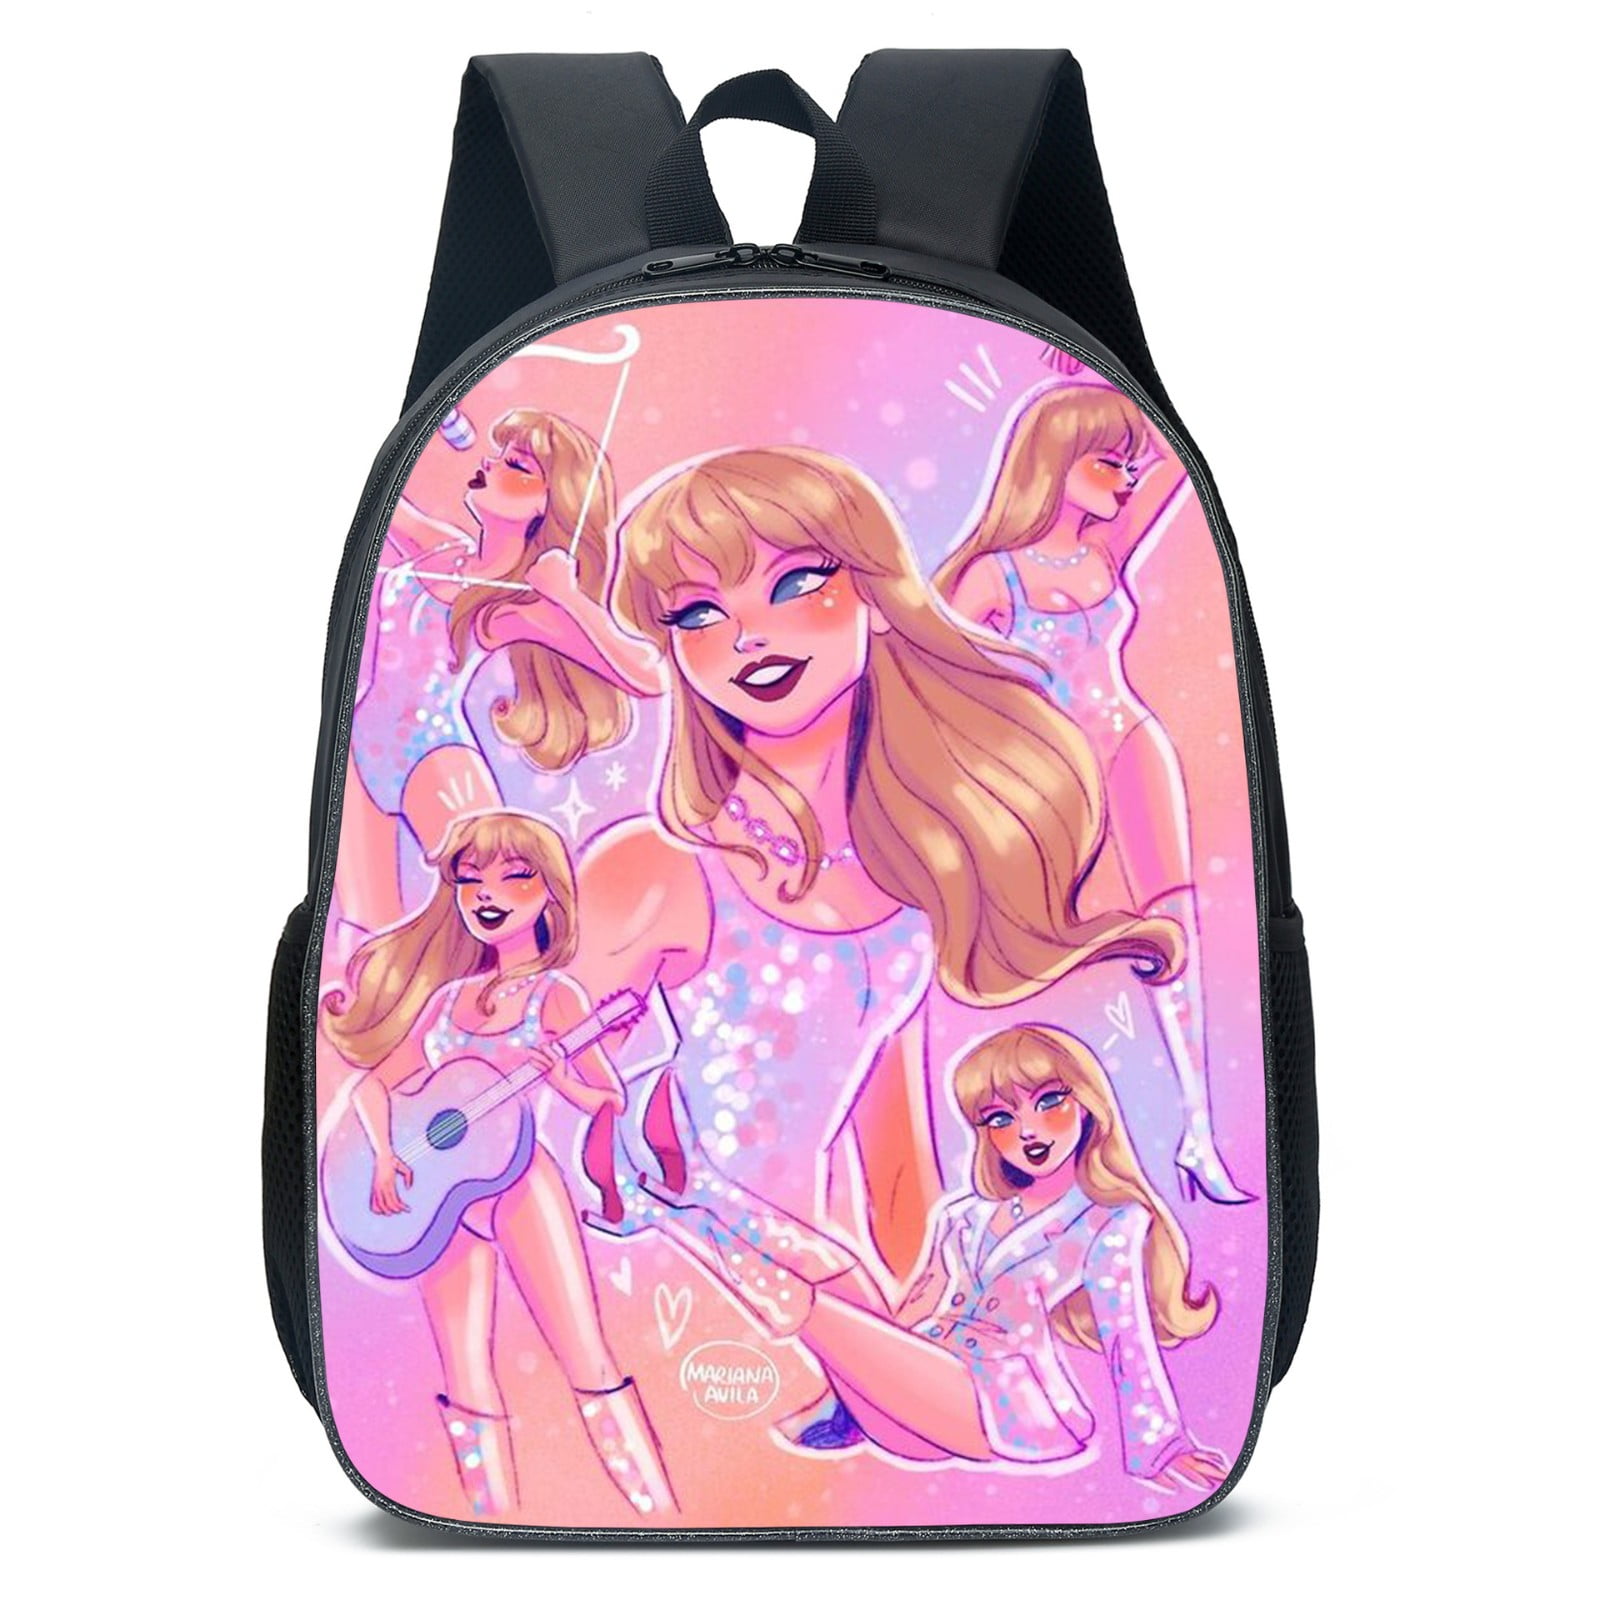 Taylor Swift Backpacks for Sale